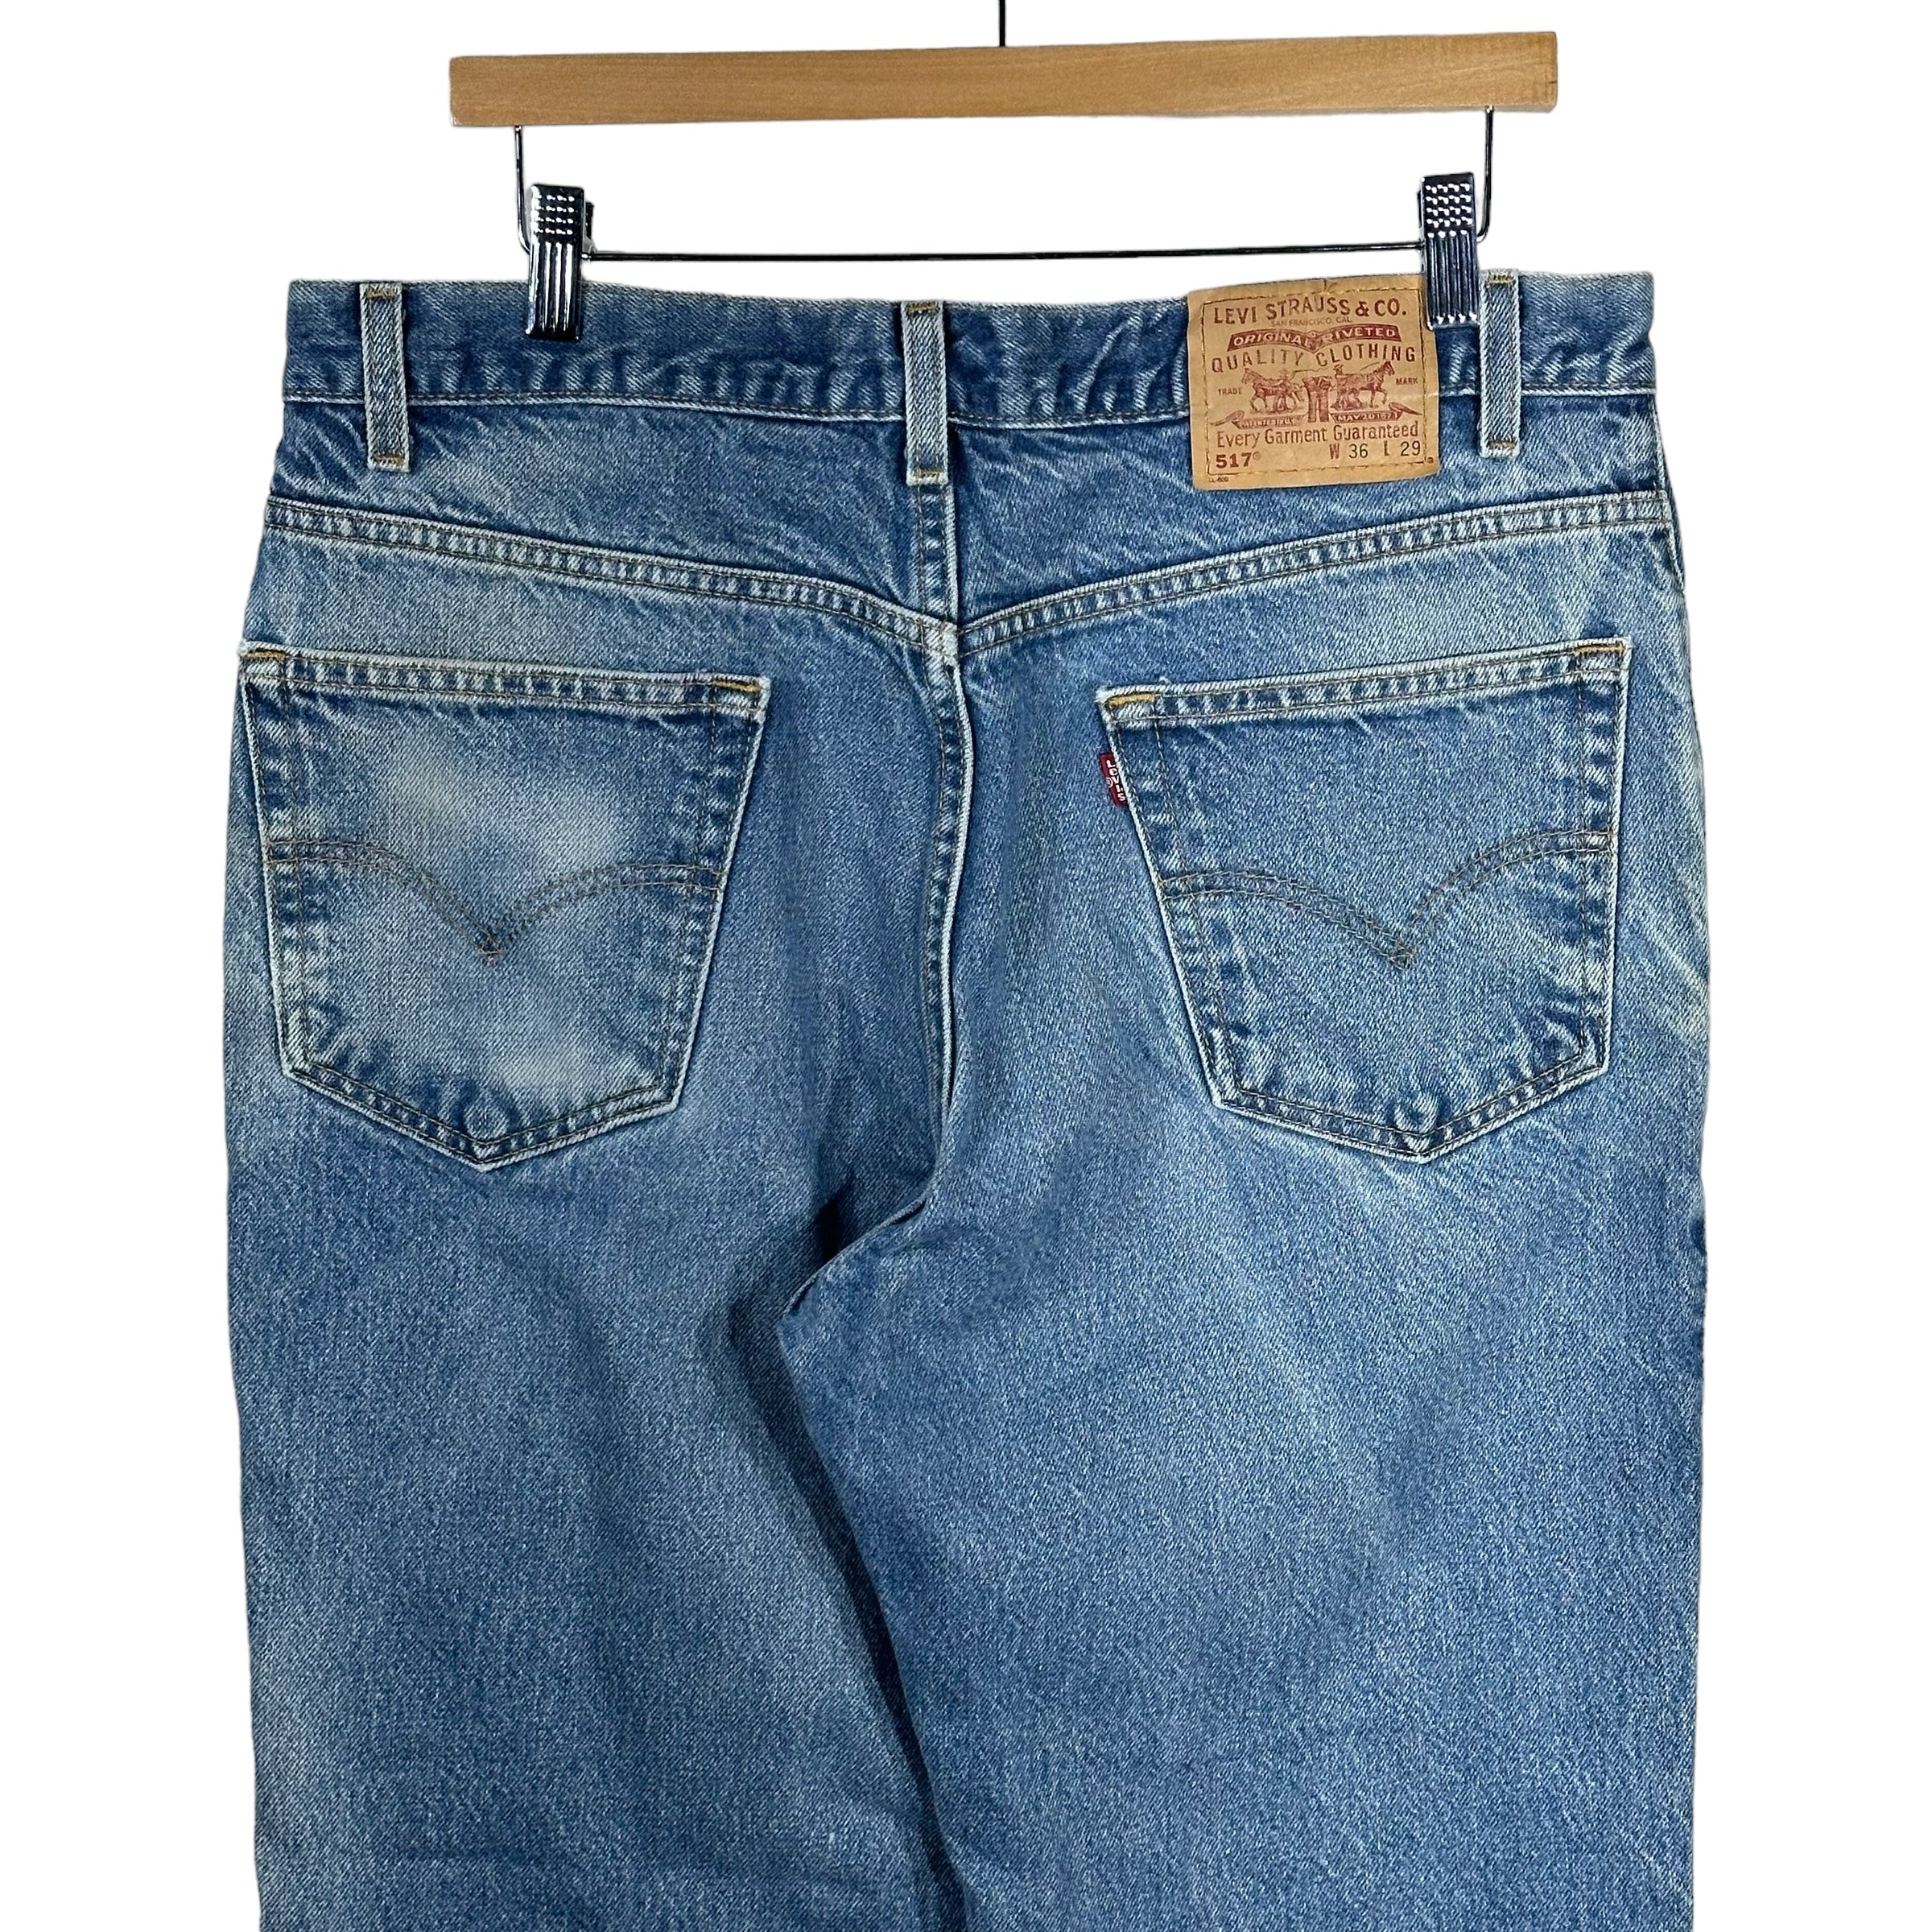 Vintage Levi's 517 Distressed Jeans